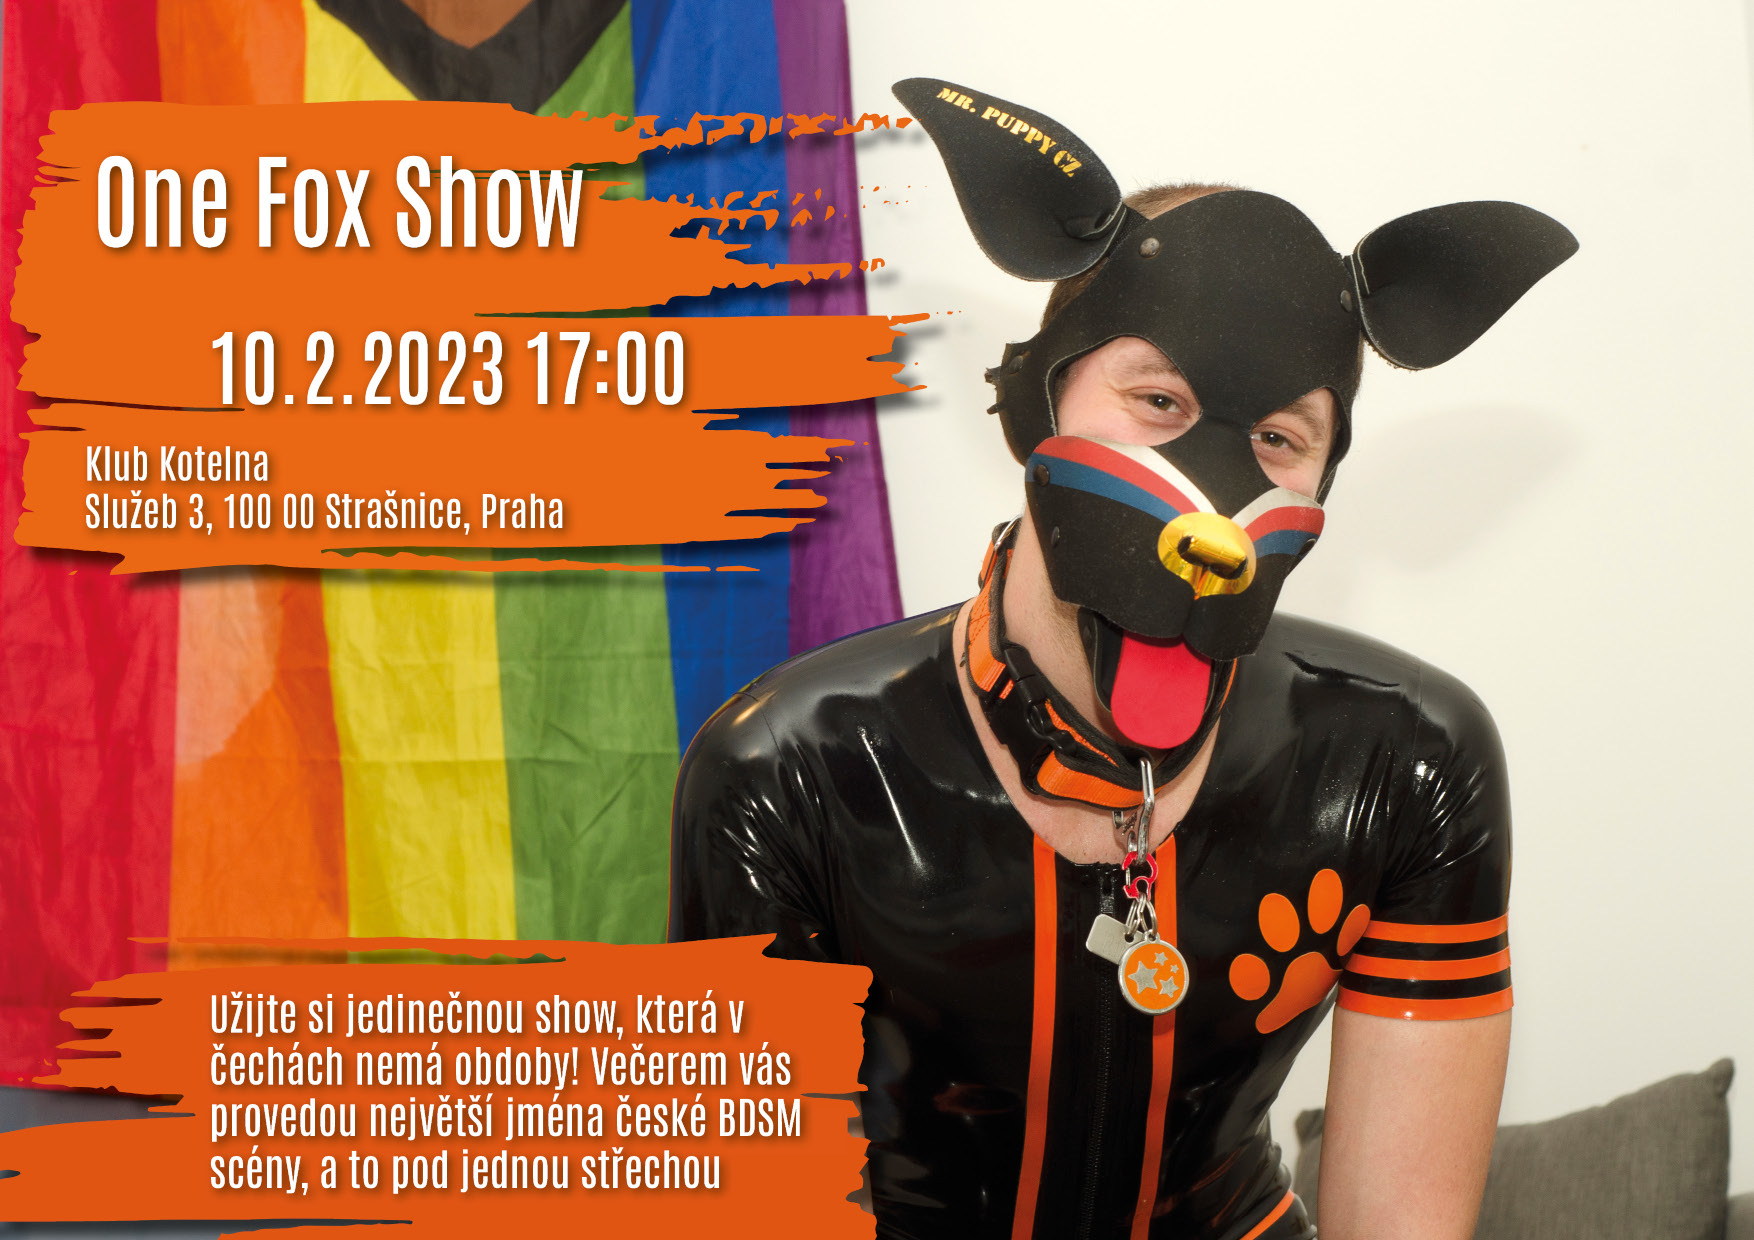 One fox show